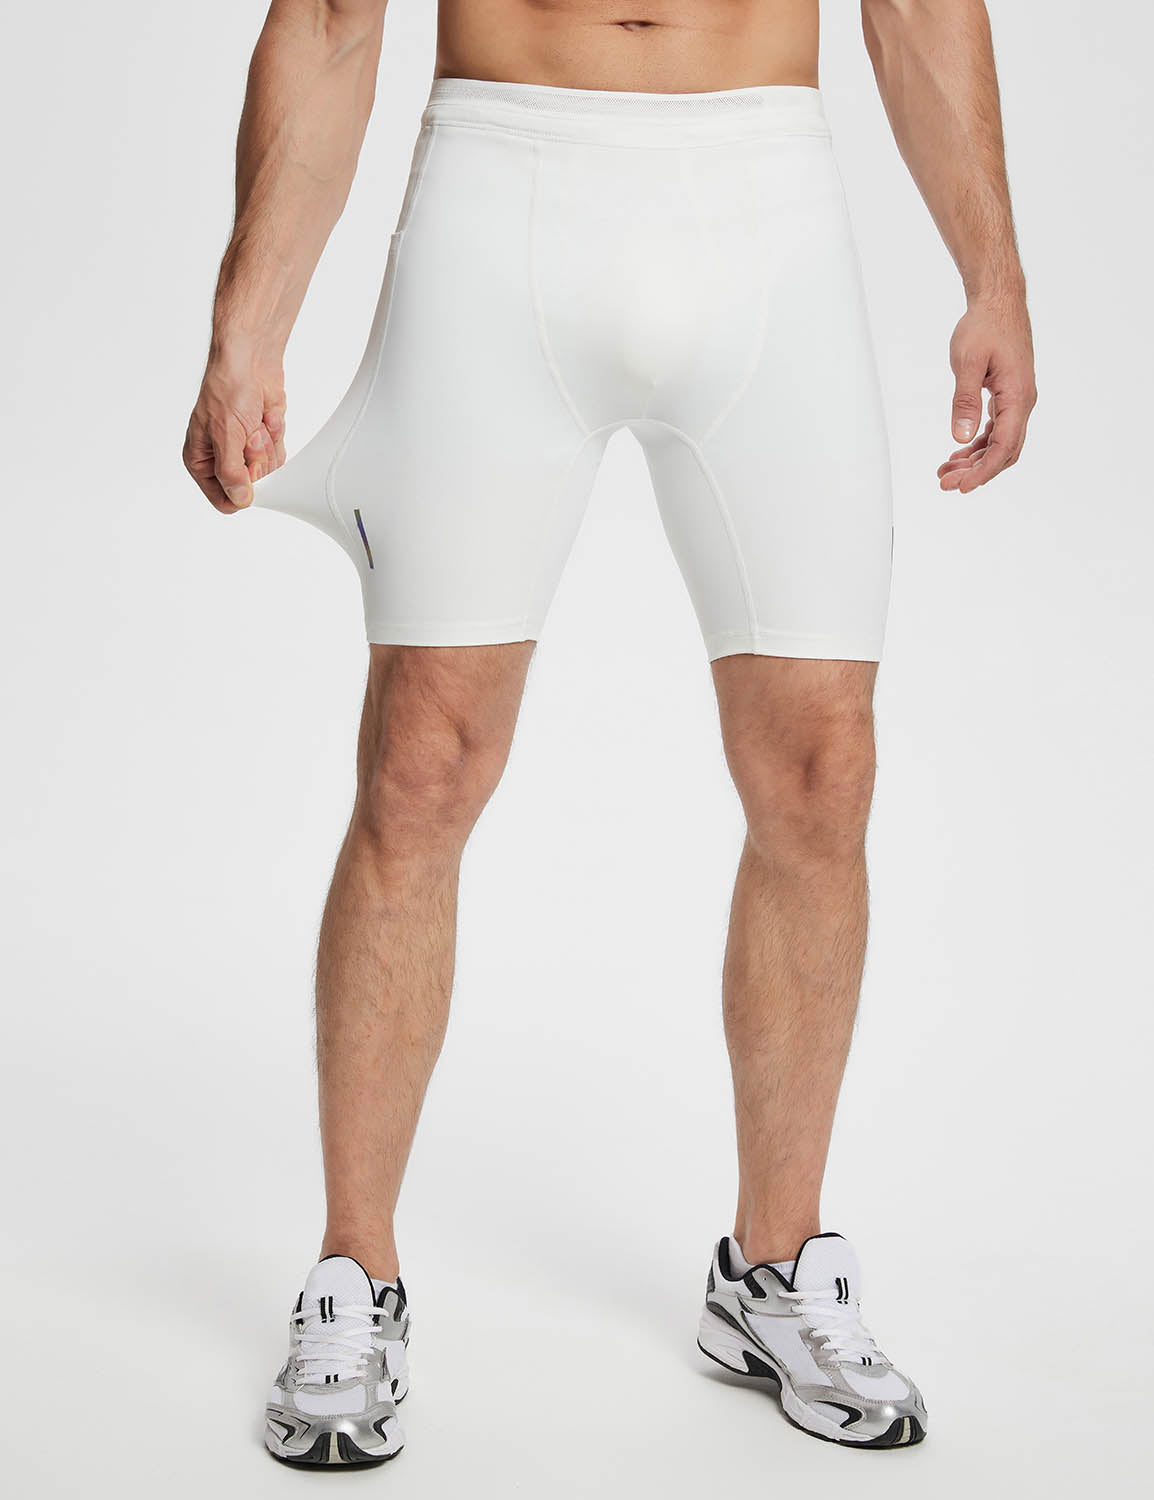 Baleaf Men's Lycra 2-in-1 Compresion Shorts (Website Exclusive) dbd060 Lucent White Side